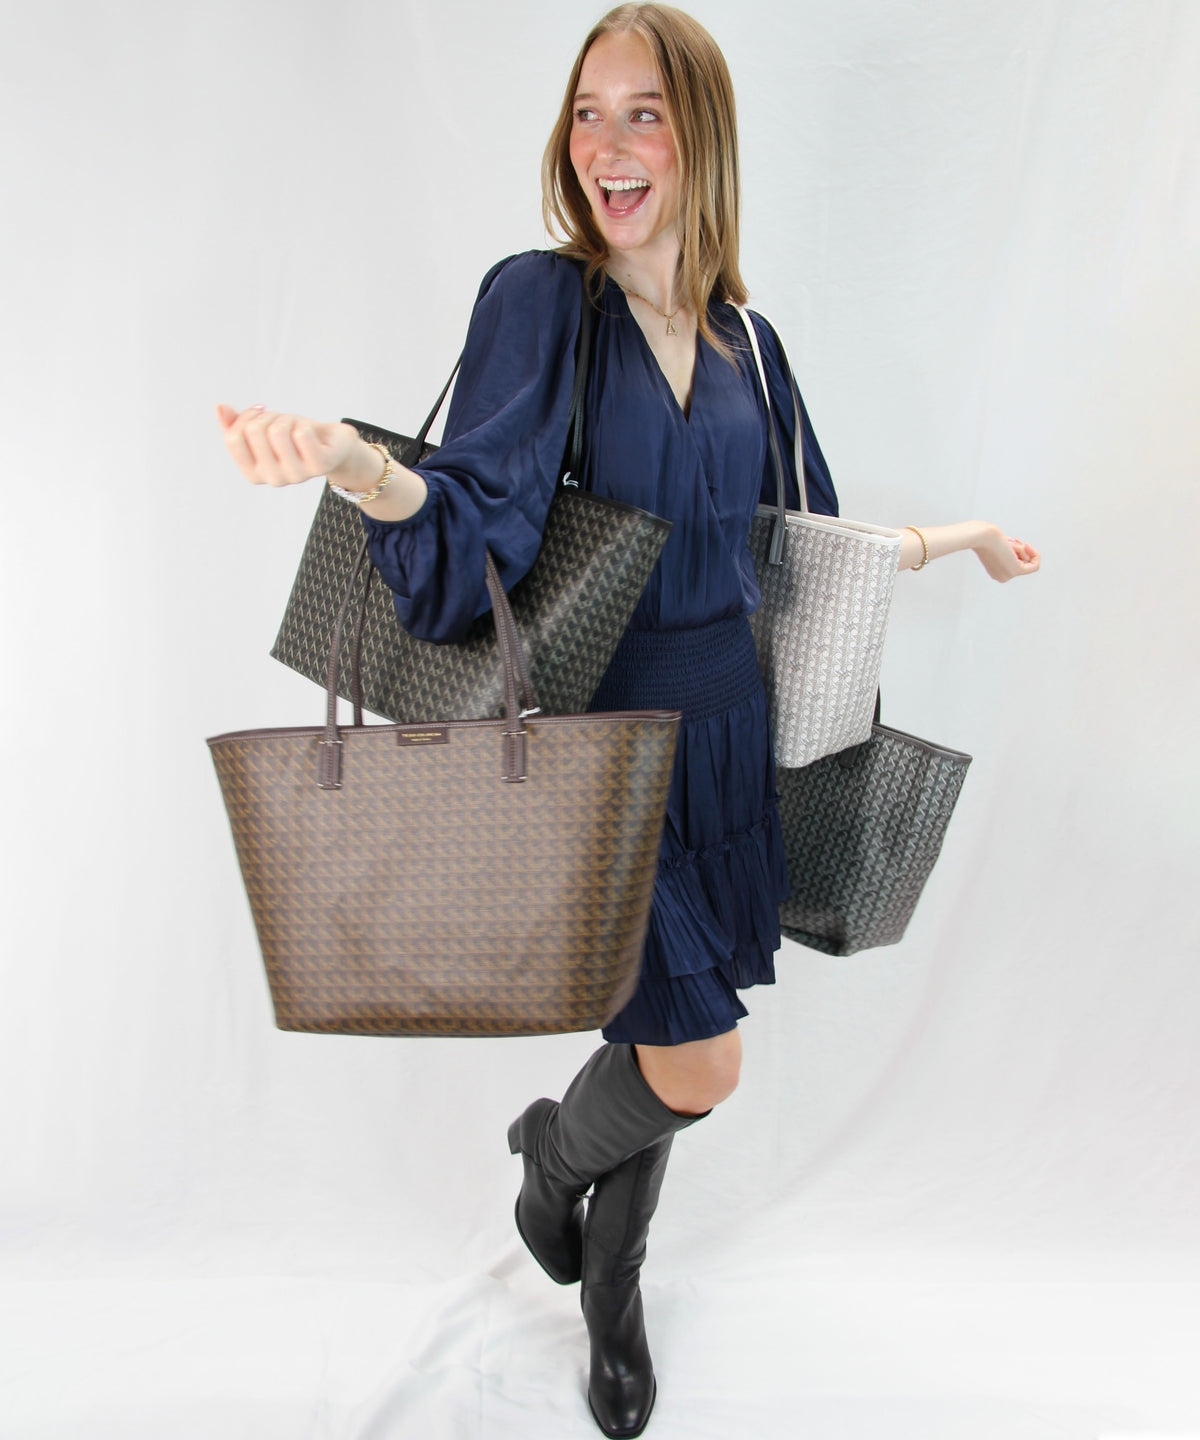 Women's 'ever-ready' Shopping Bag by Tory Burch